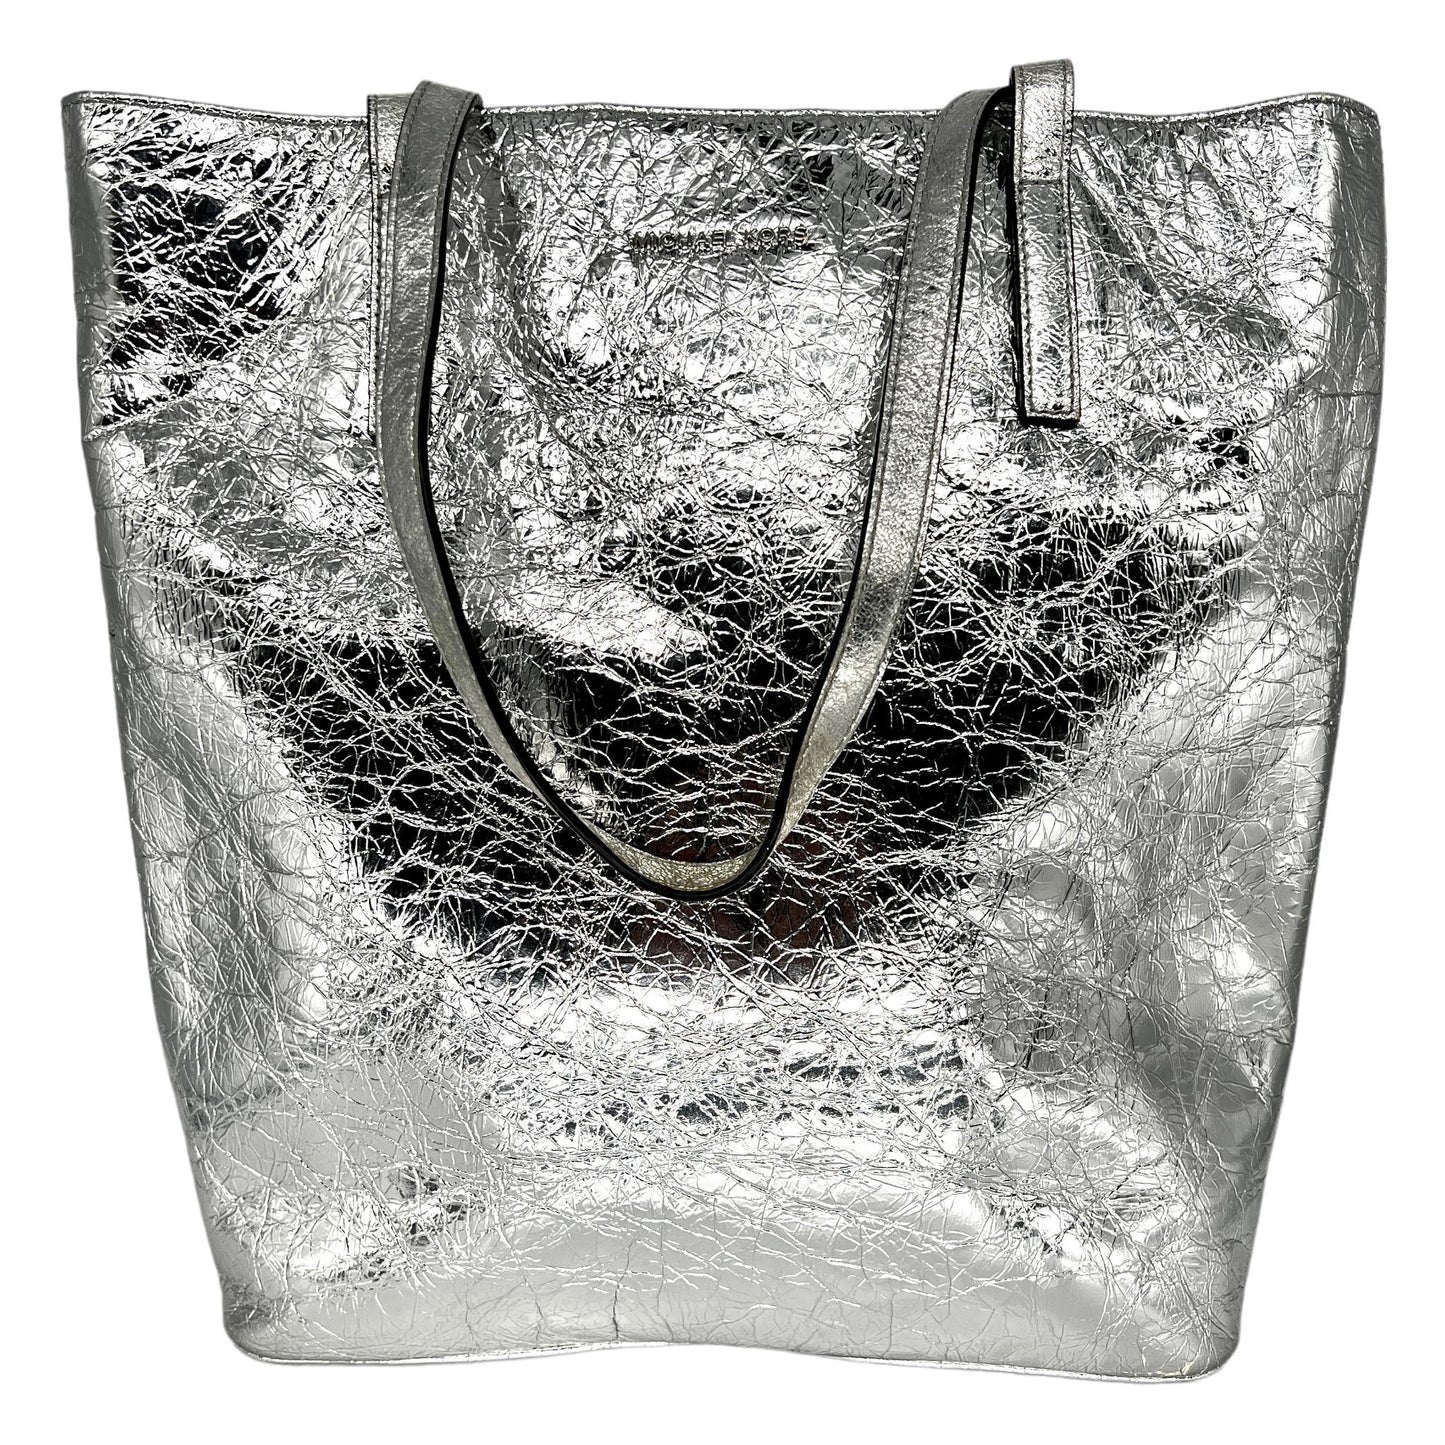 Michael Kors Emry Large Crinkled-Leather Tote Bag in Metallic Silver Foil